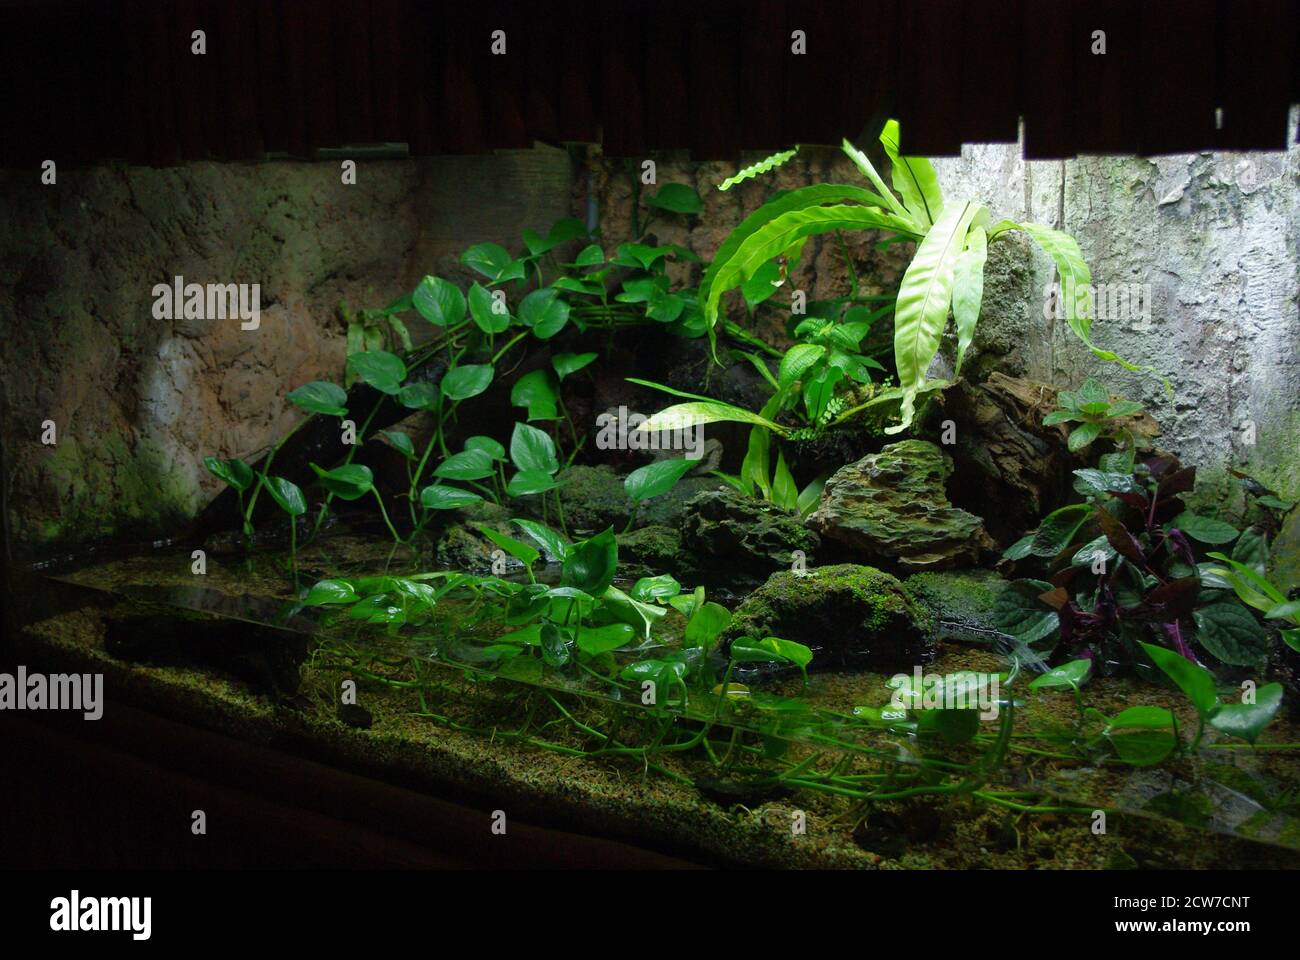 Unbestimmt verdünnen Eis aqua terrarium planting tank Seele